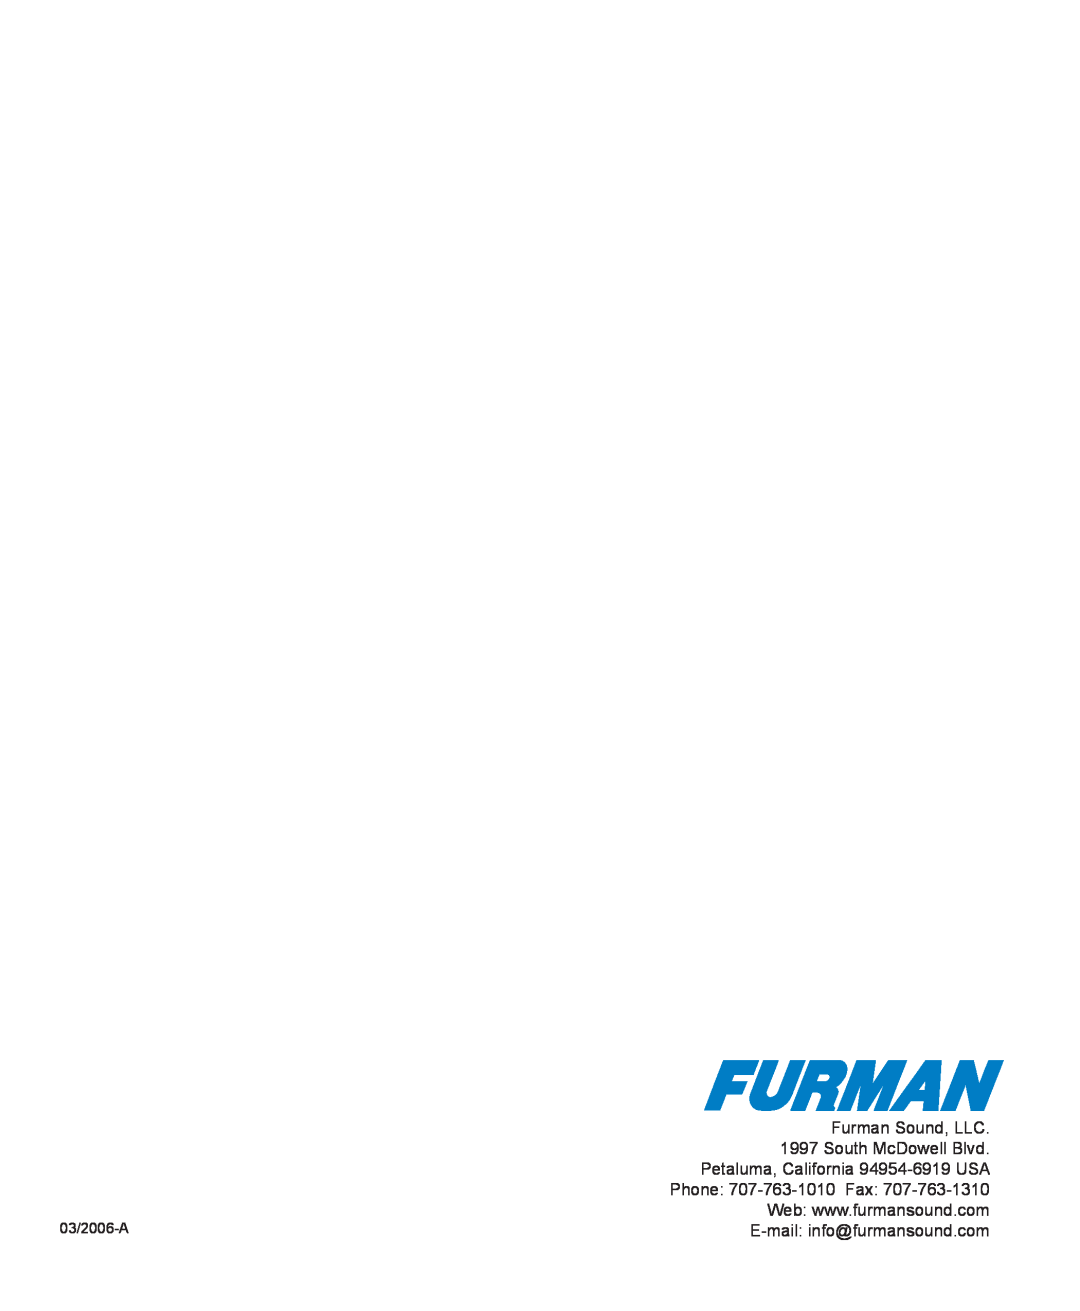 Furman Sound PS-PRO II Furman Sound, LLC, South McDowell Blvd, Petaluma, California 94954-6919 USA, Phone 707-763-1010 Fax 